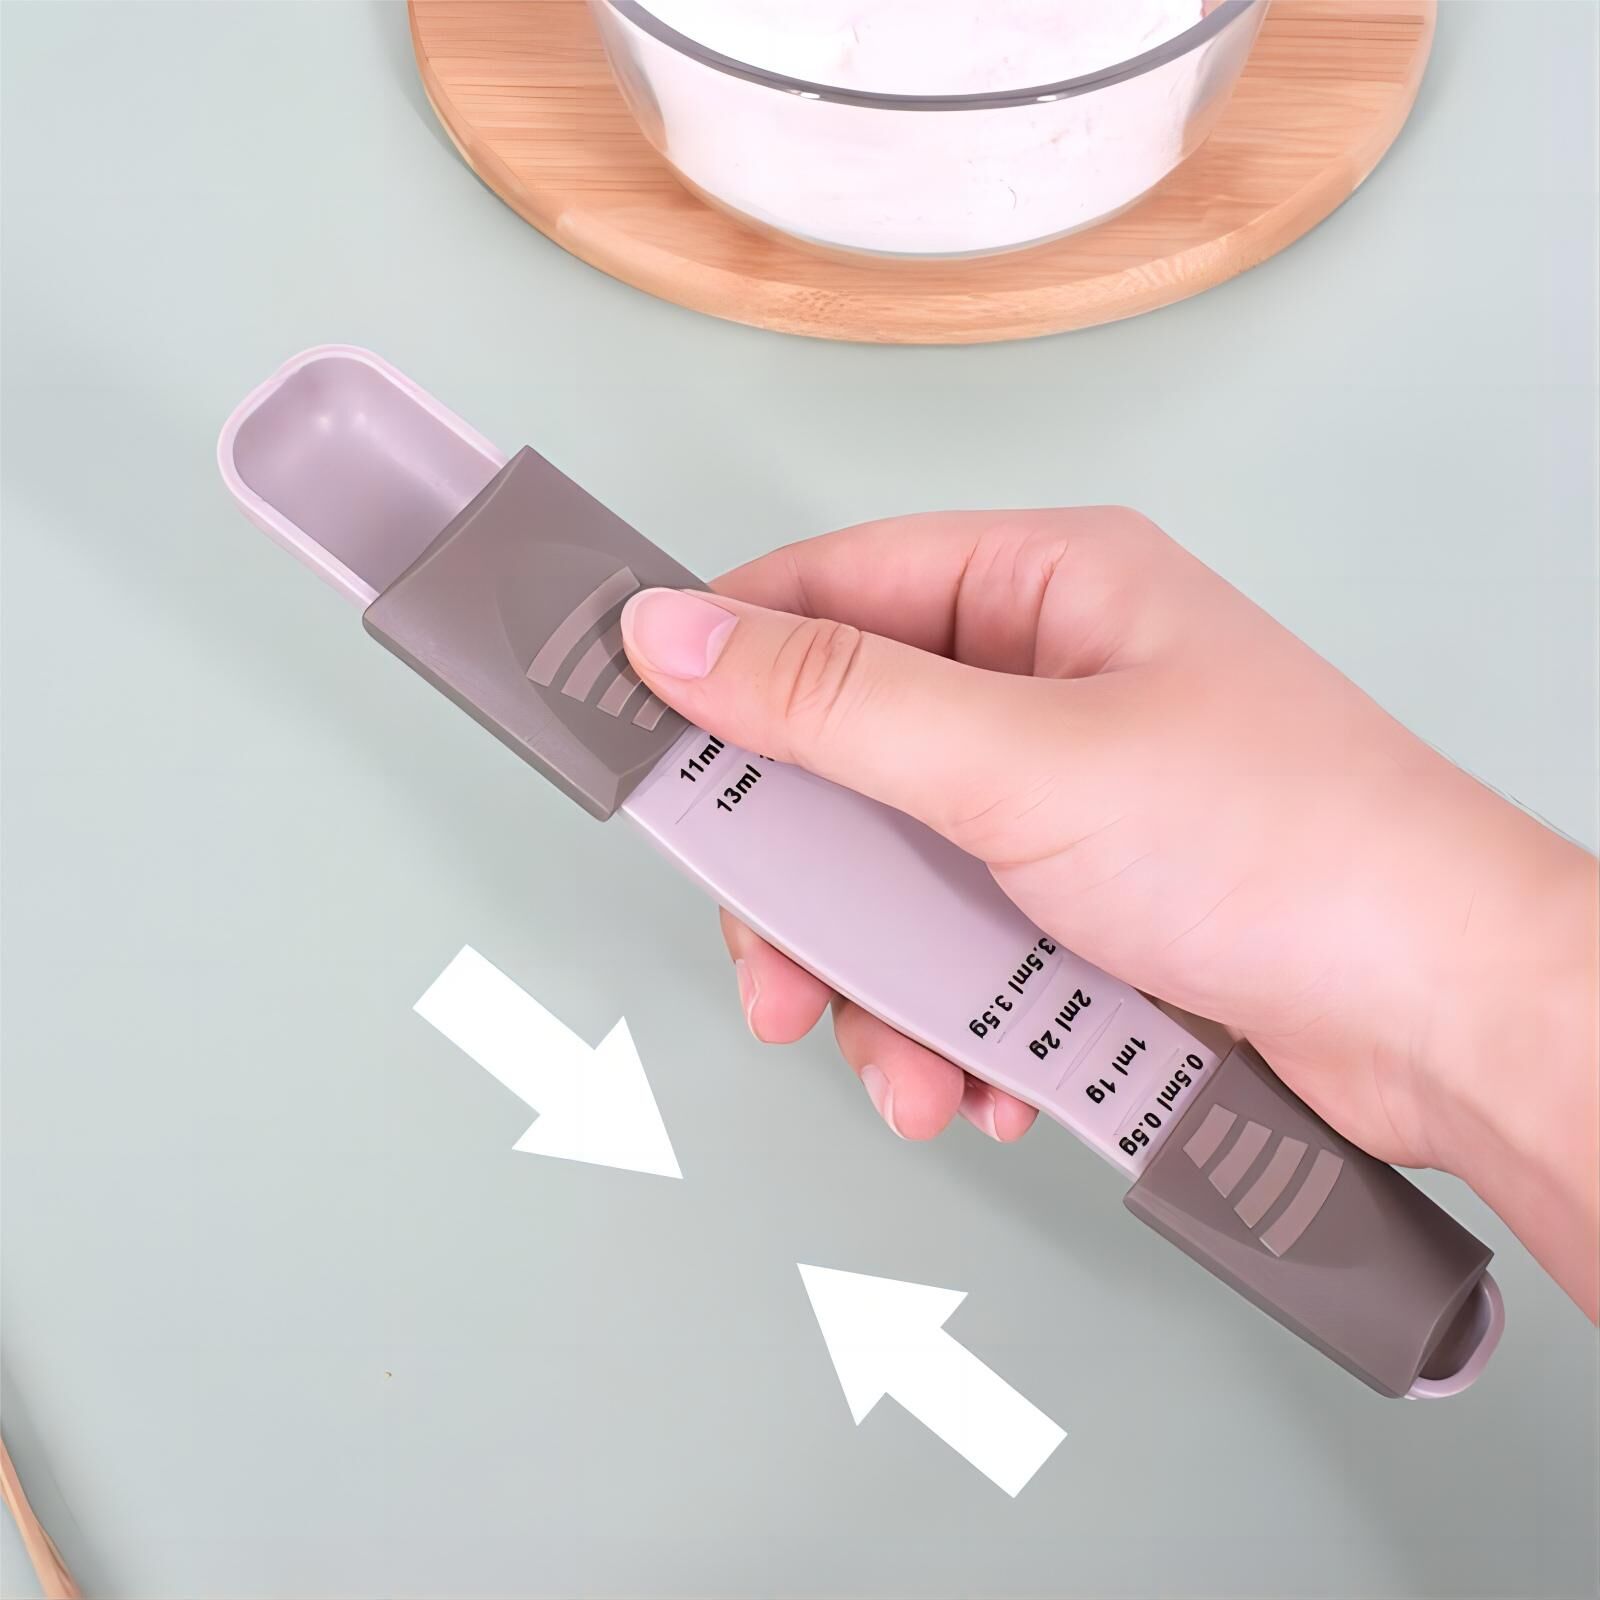 Adjustable Measuring Spoon – Innovation